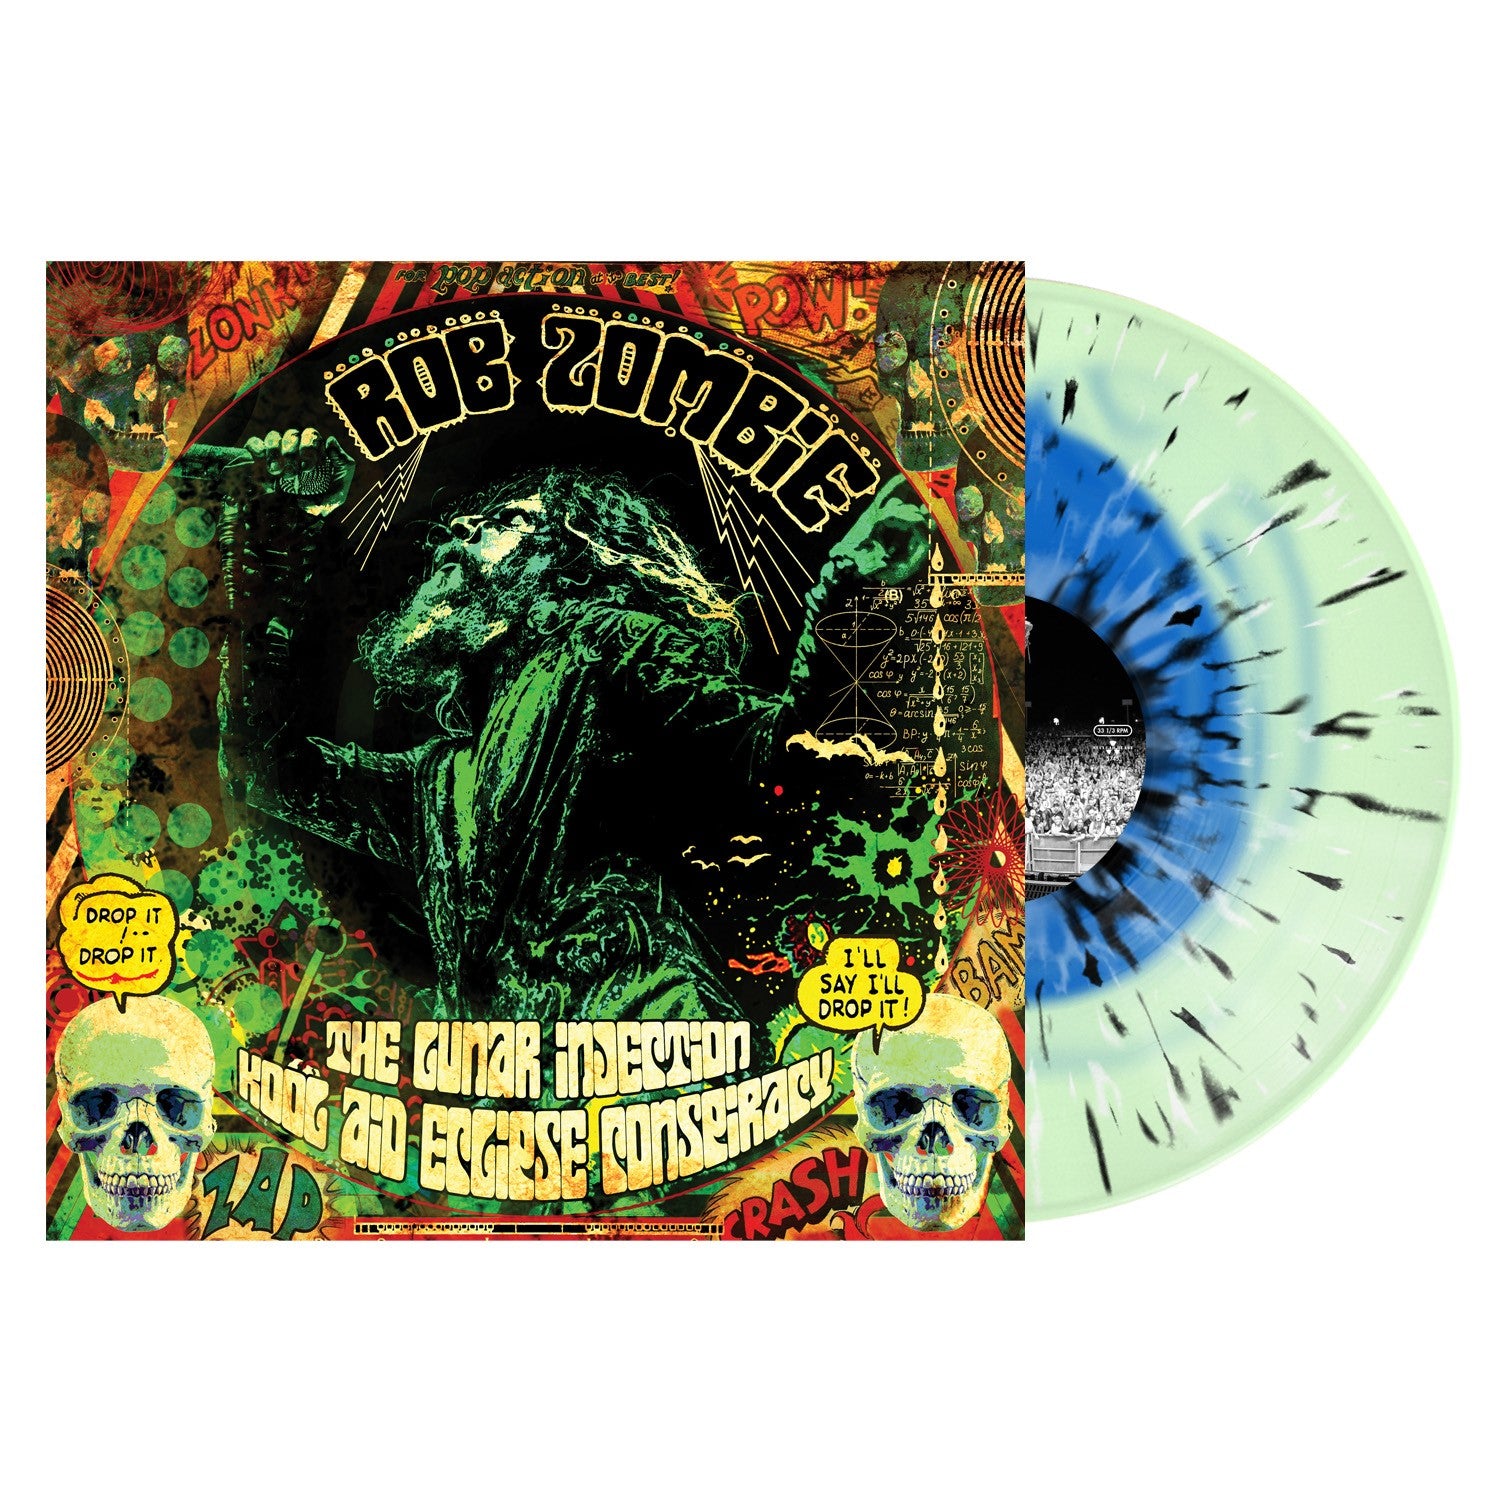 Rob Zombie "The Lunar Injection Kool Aid Eclipse Conspiracy" Blue in Bottle Green w/ Black Splatter Vinyl